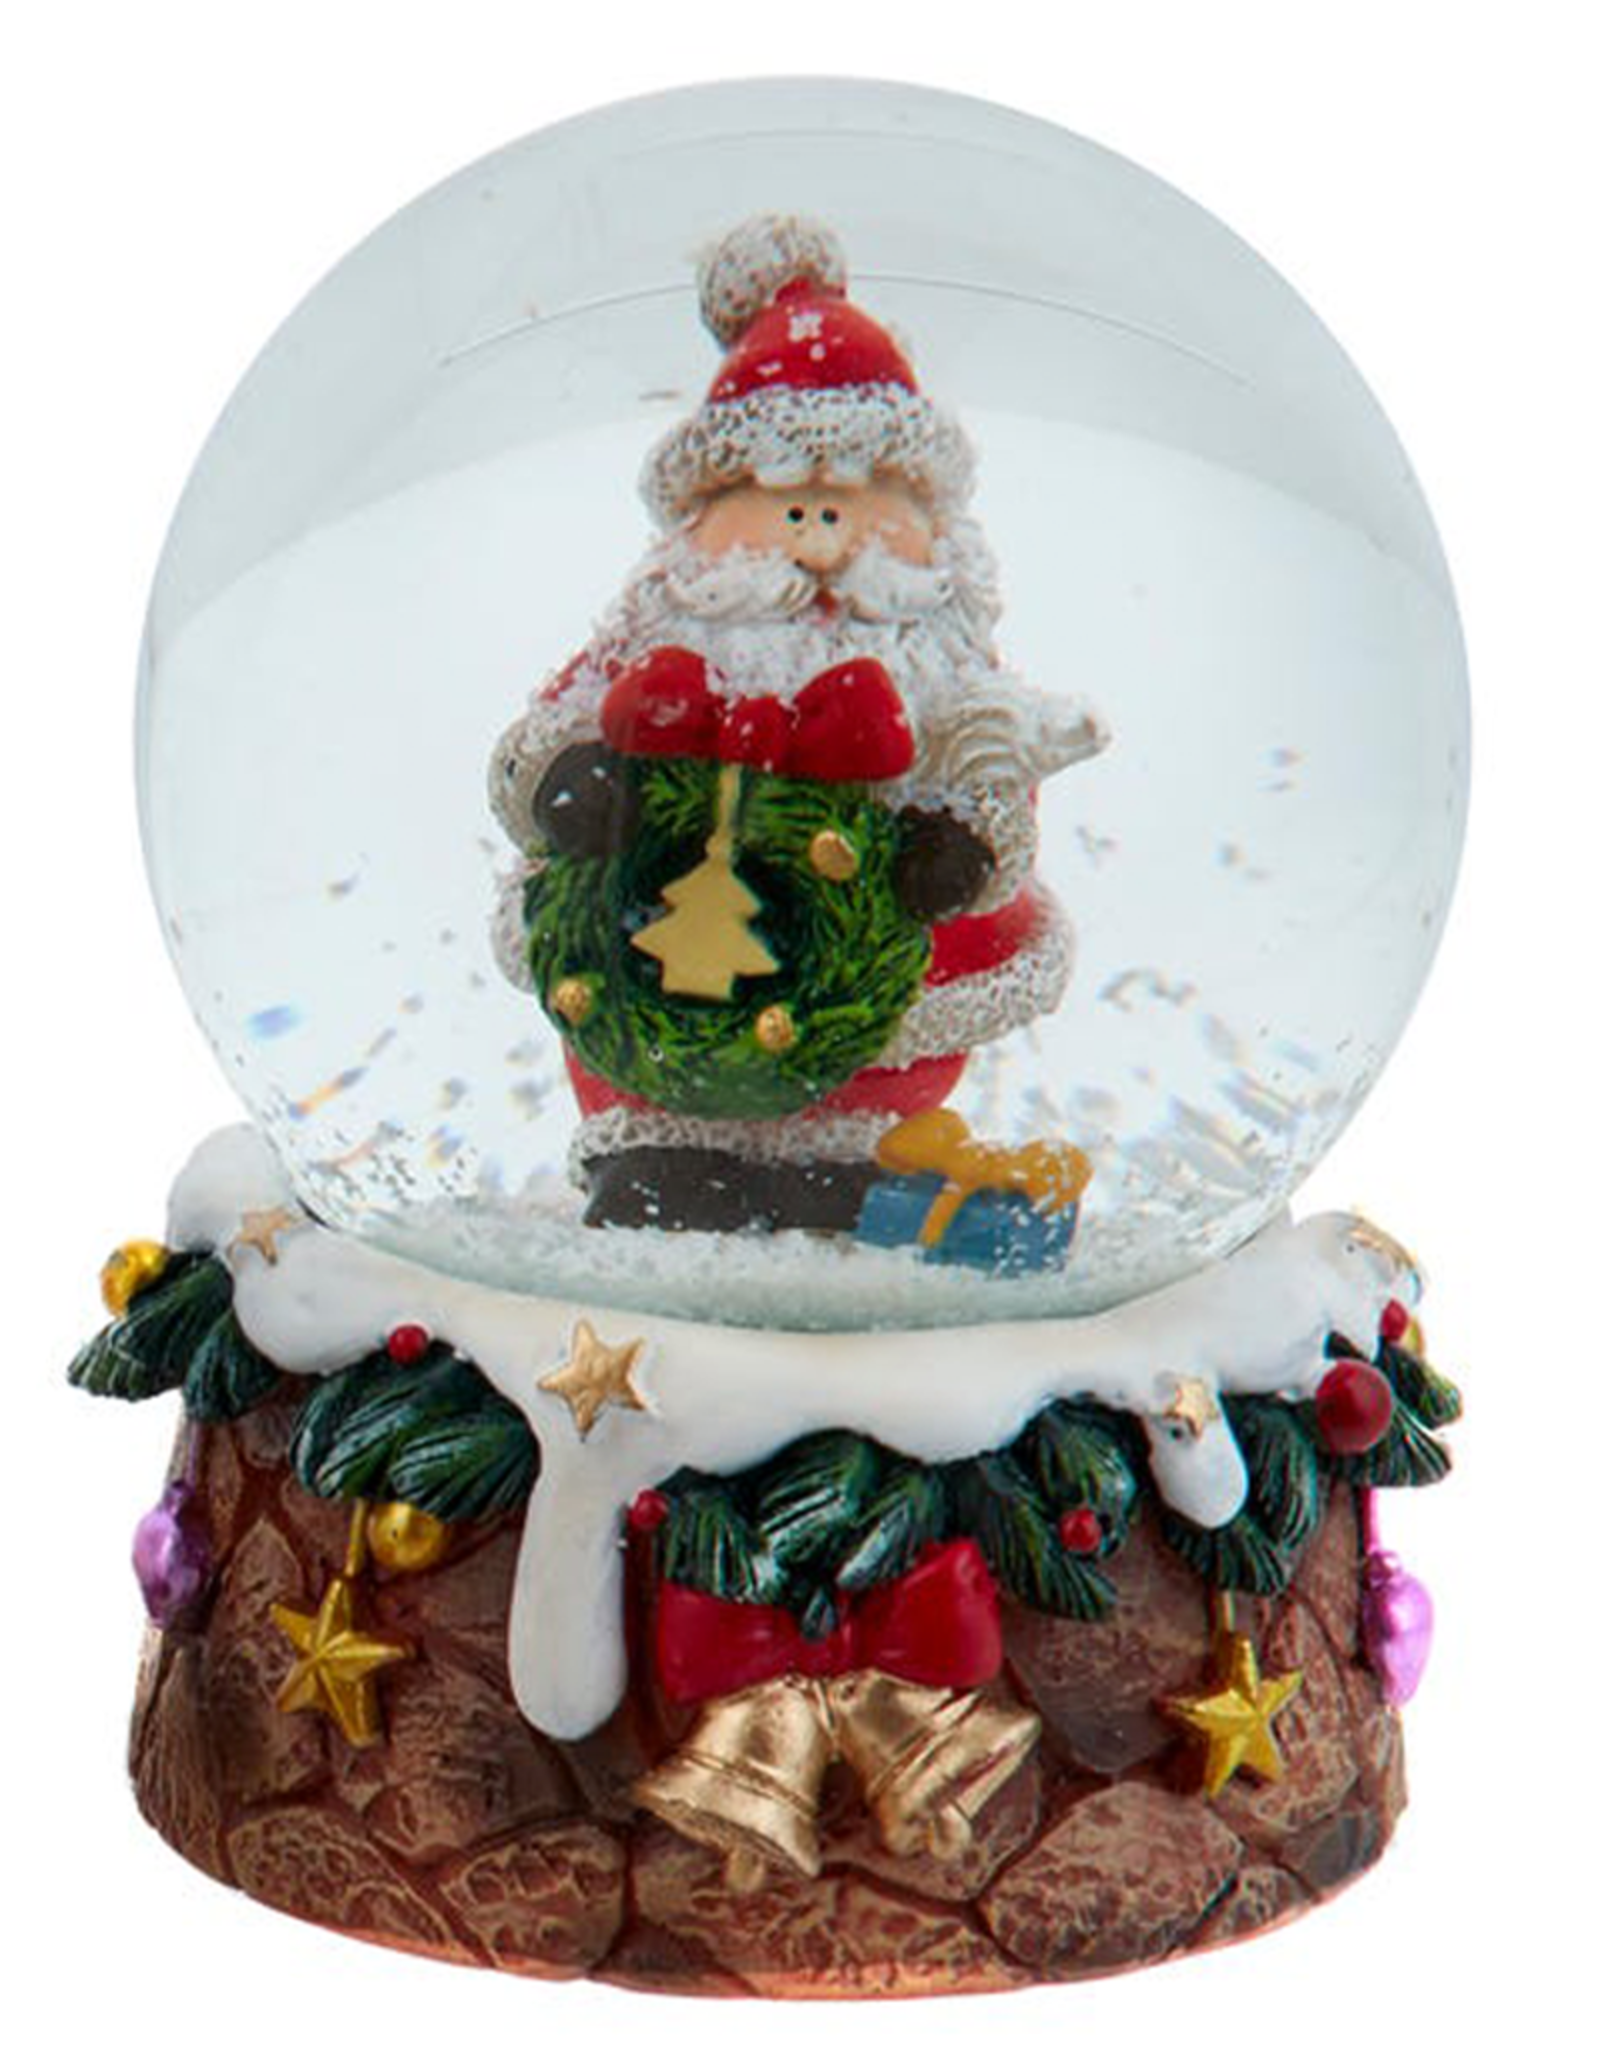 Kurt Adler Christmas Snow Globe 65mm Santa With Wreath Water Globe